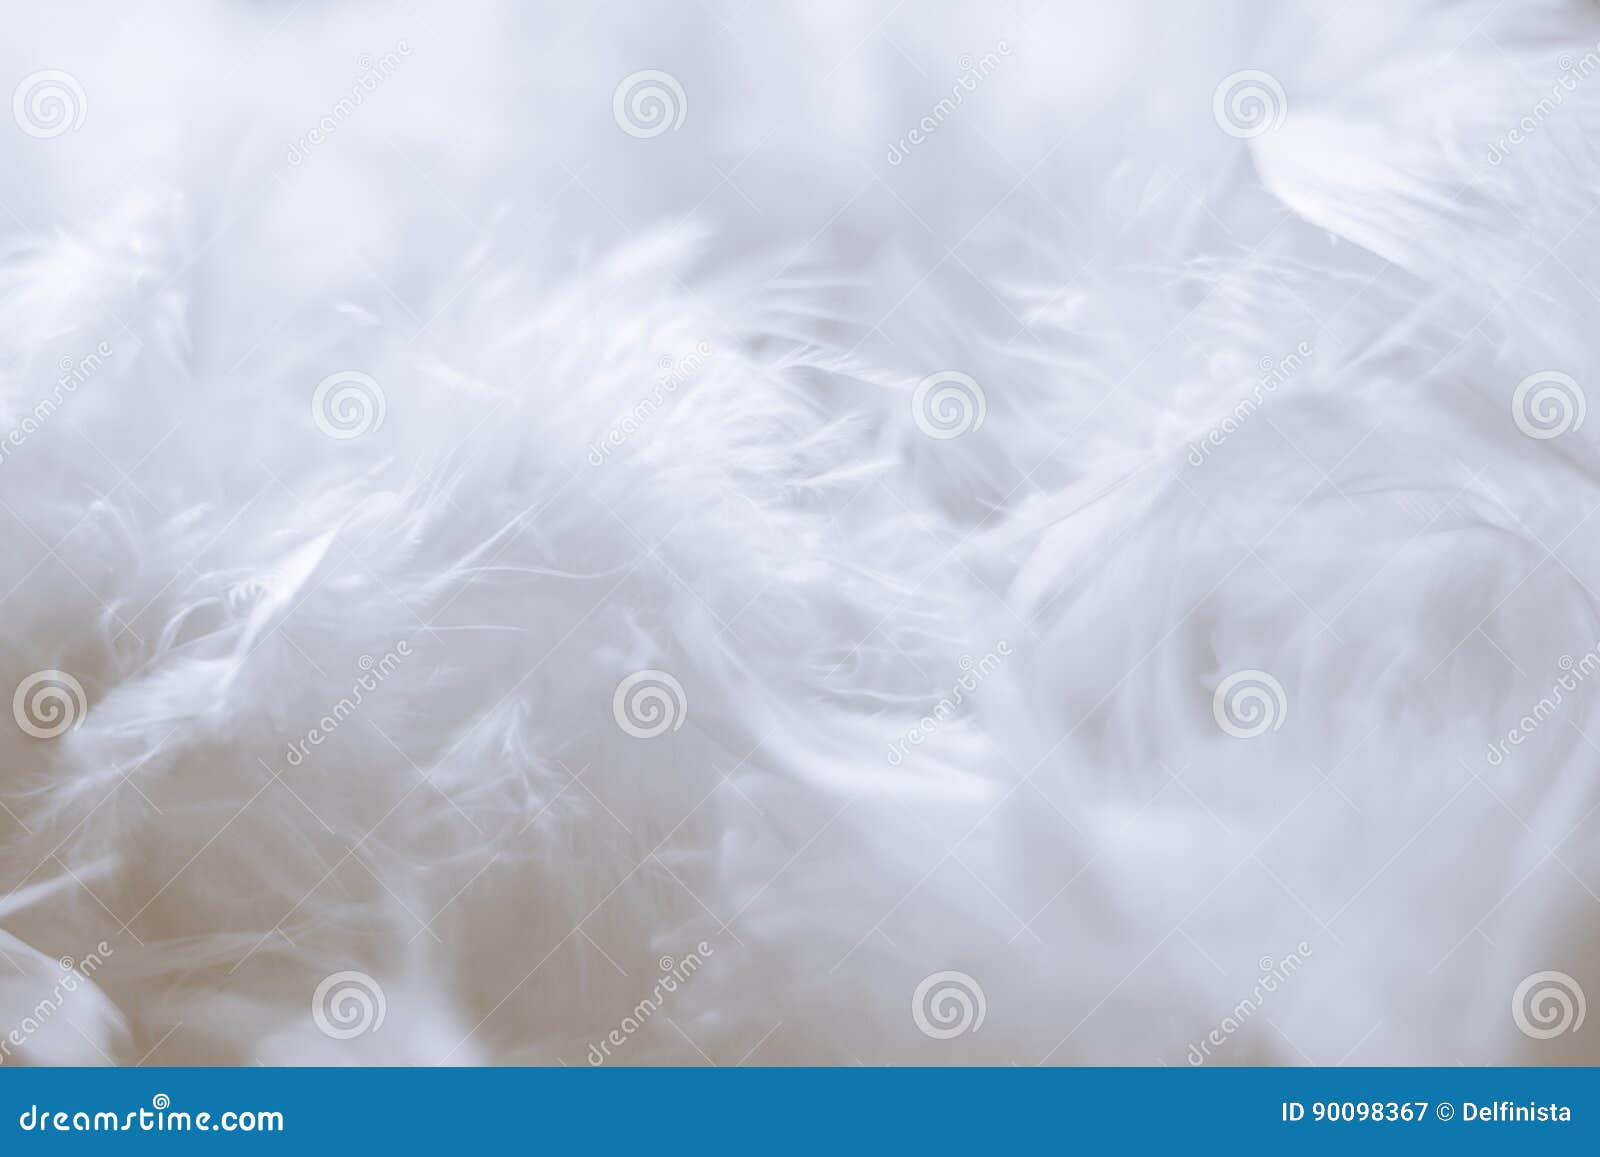 white feathers background - stock photos